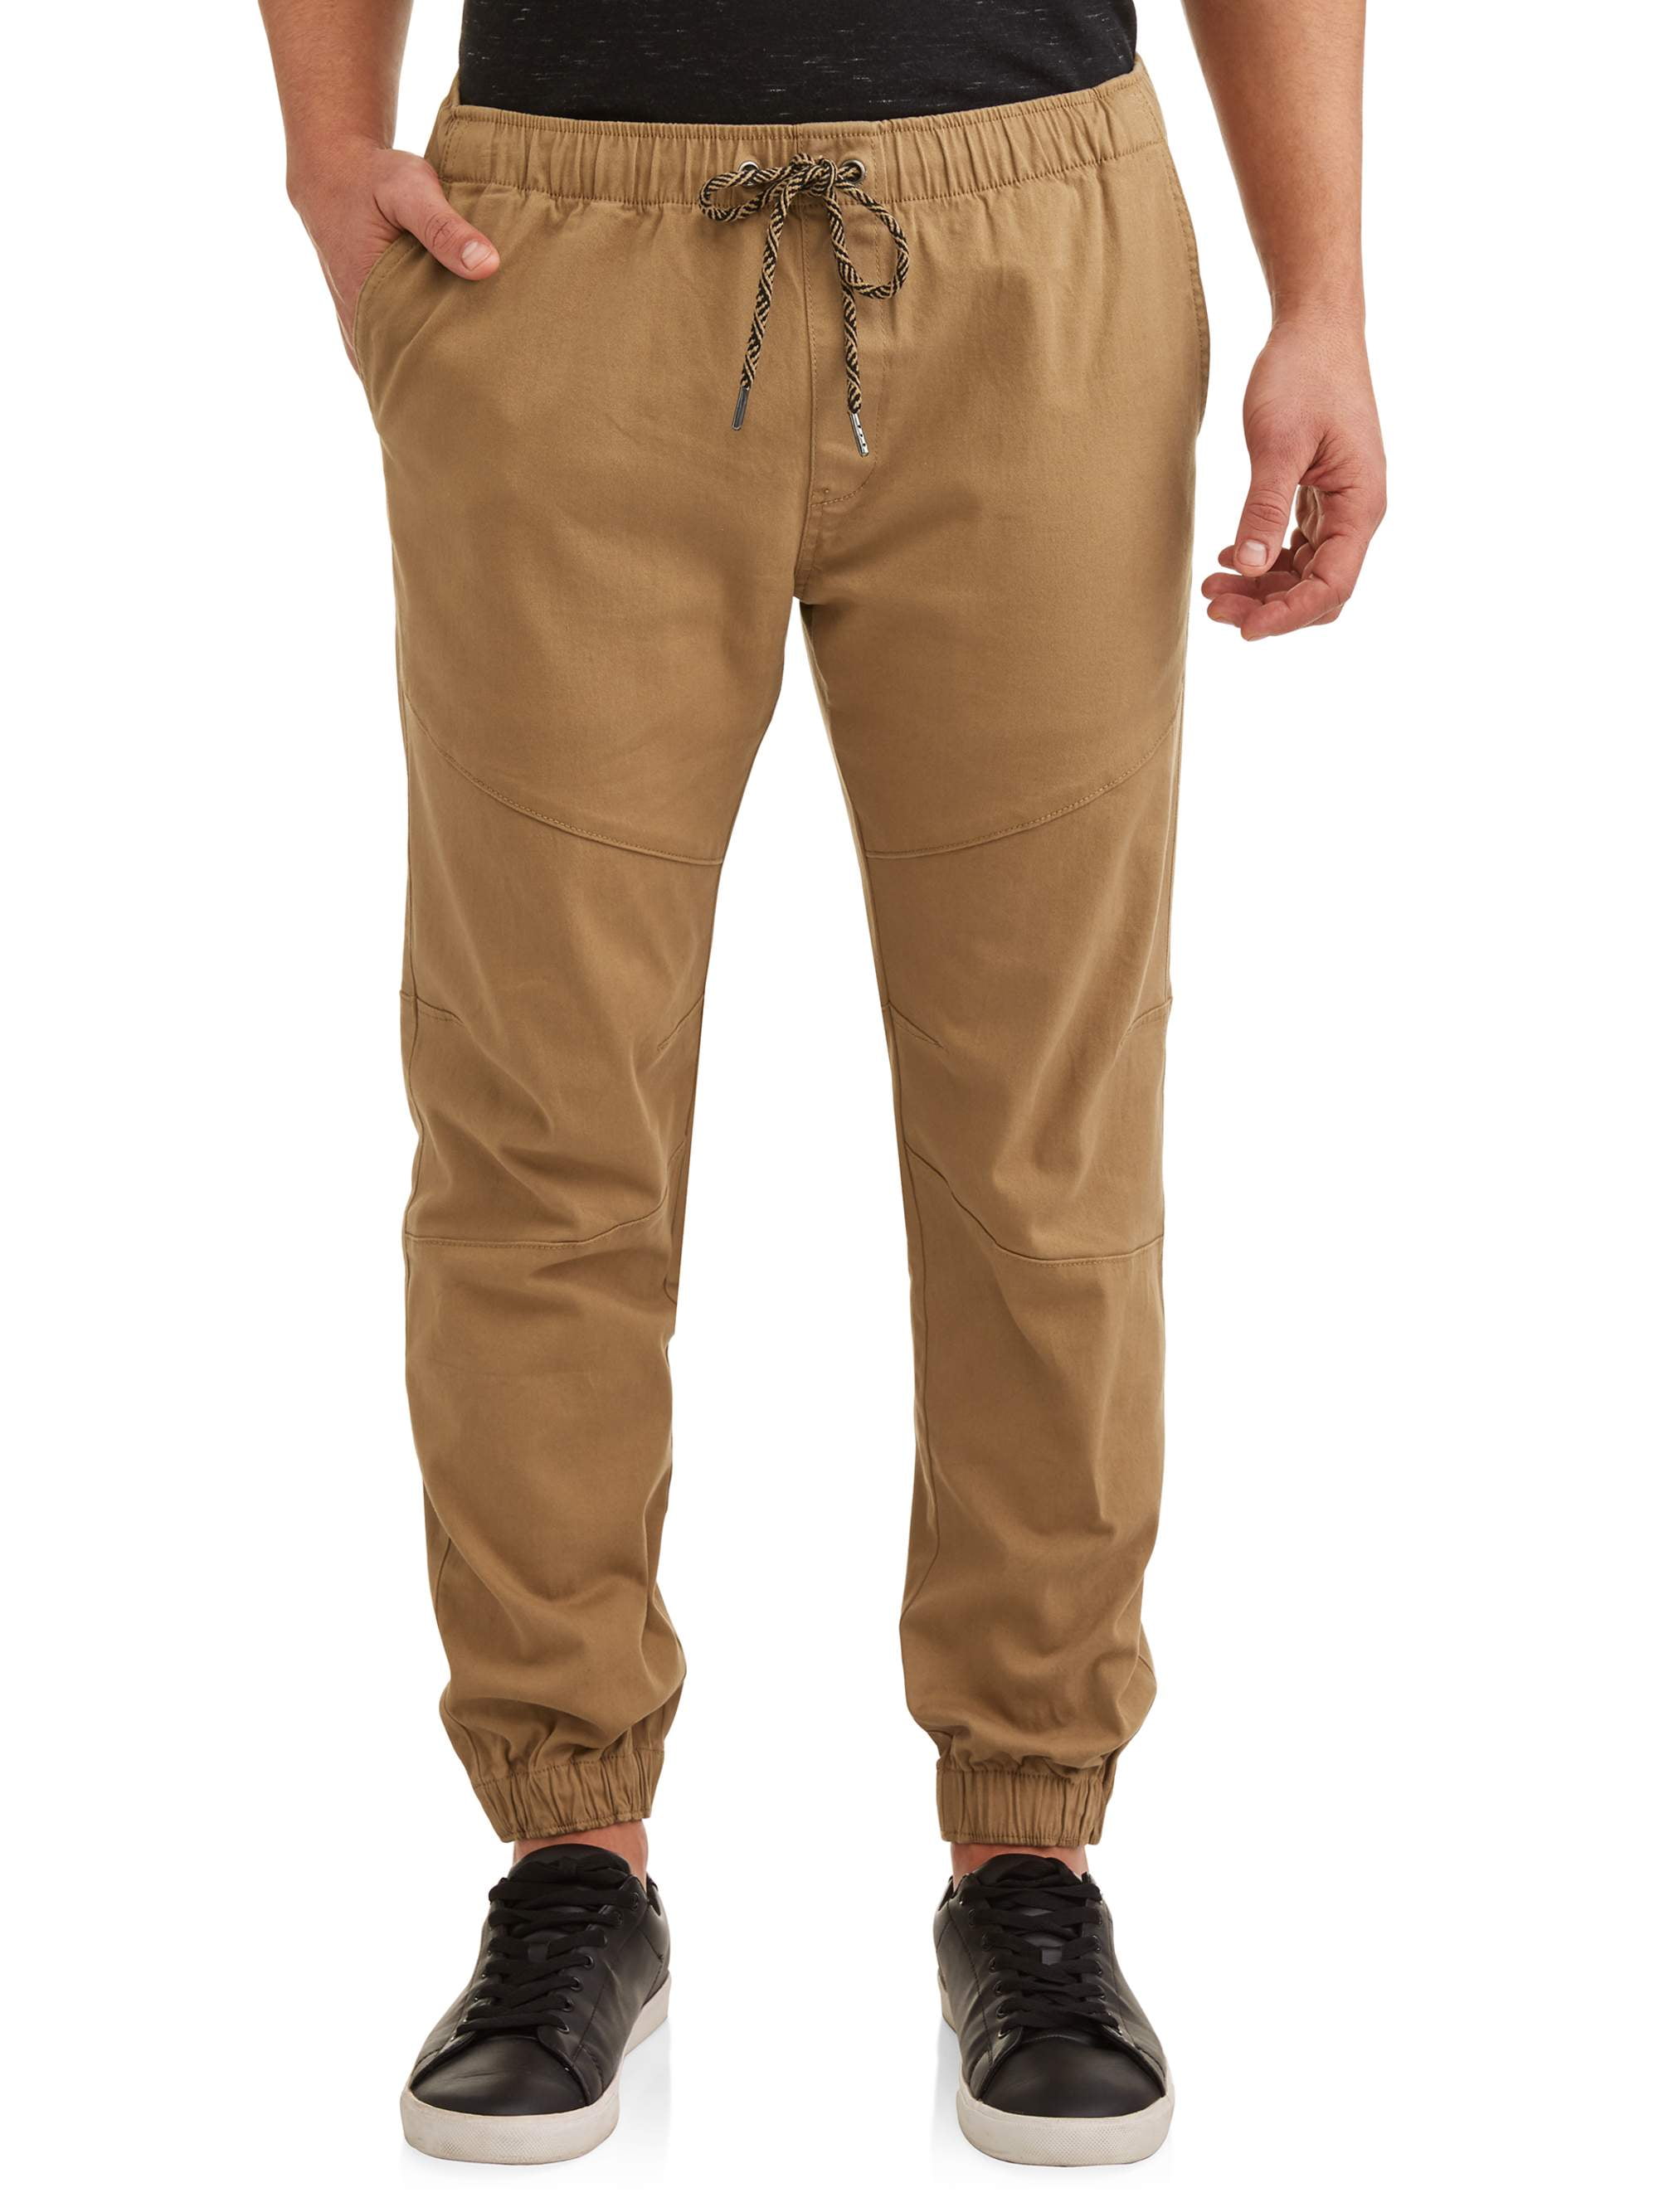 Lazer Men's Pull-On Stretch Twill Jogger Pants, Sizes S-XL, Mens